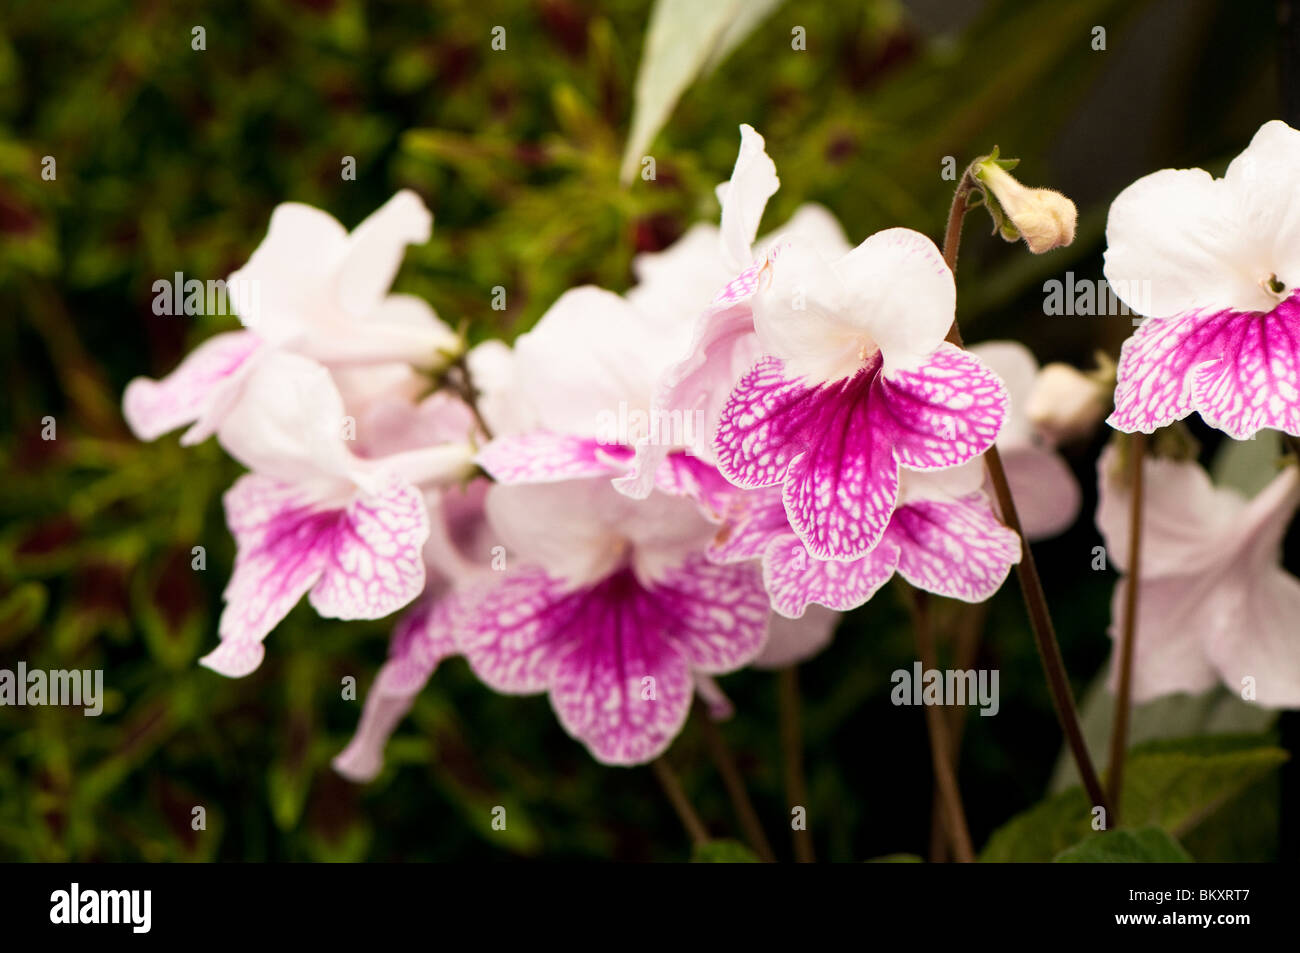 Streptocarpus 'Leyla' in fiore Foto stock - Alamy